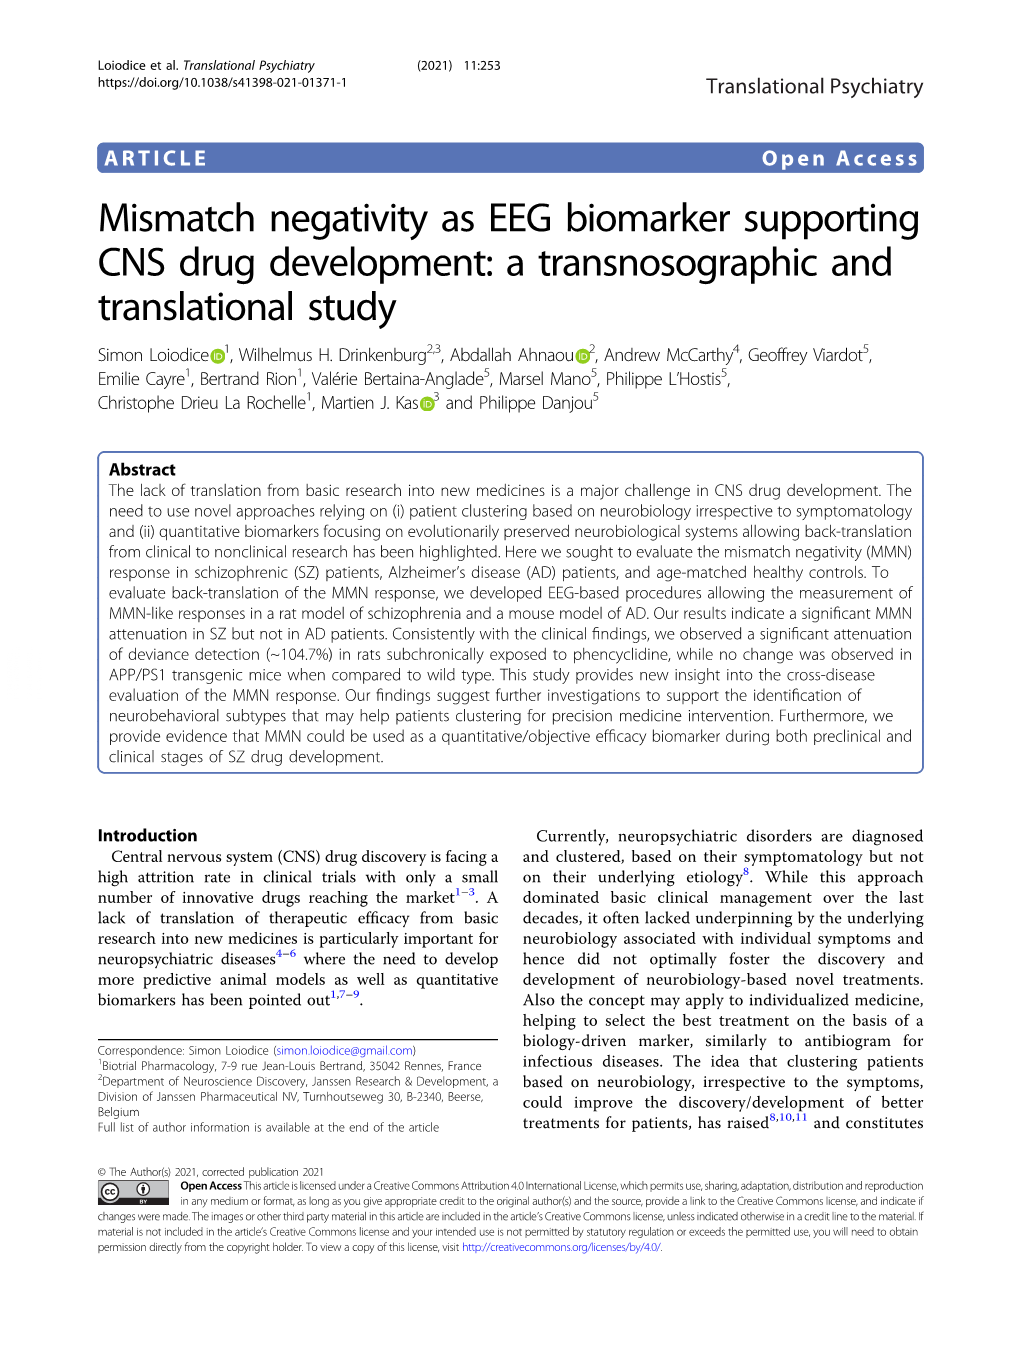 Mismatch Negativity As EEG Biomarker Supporting CNS